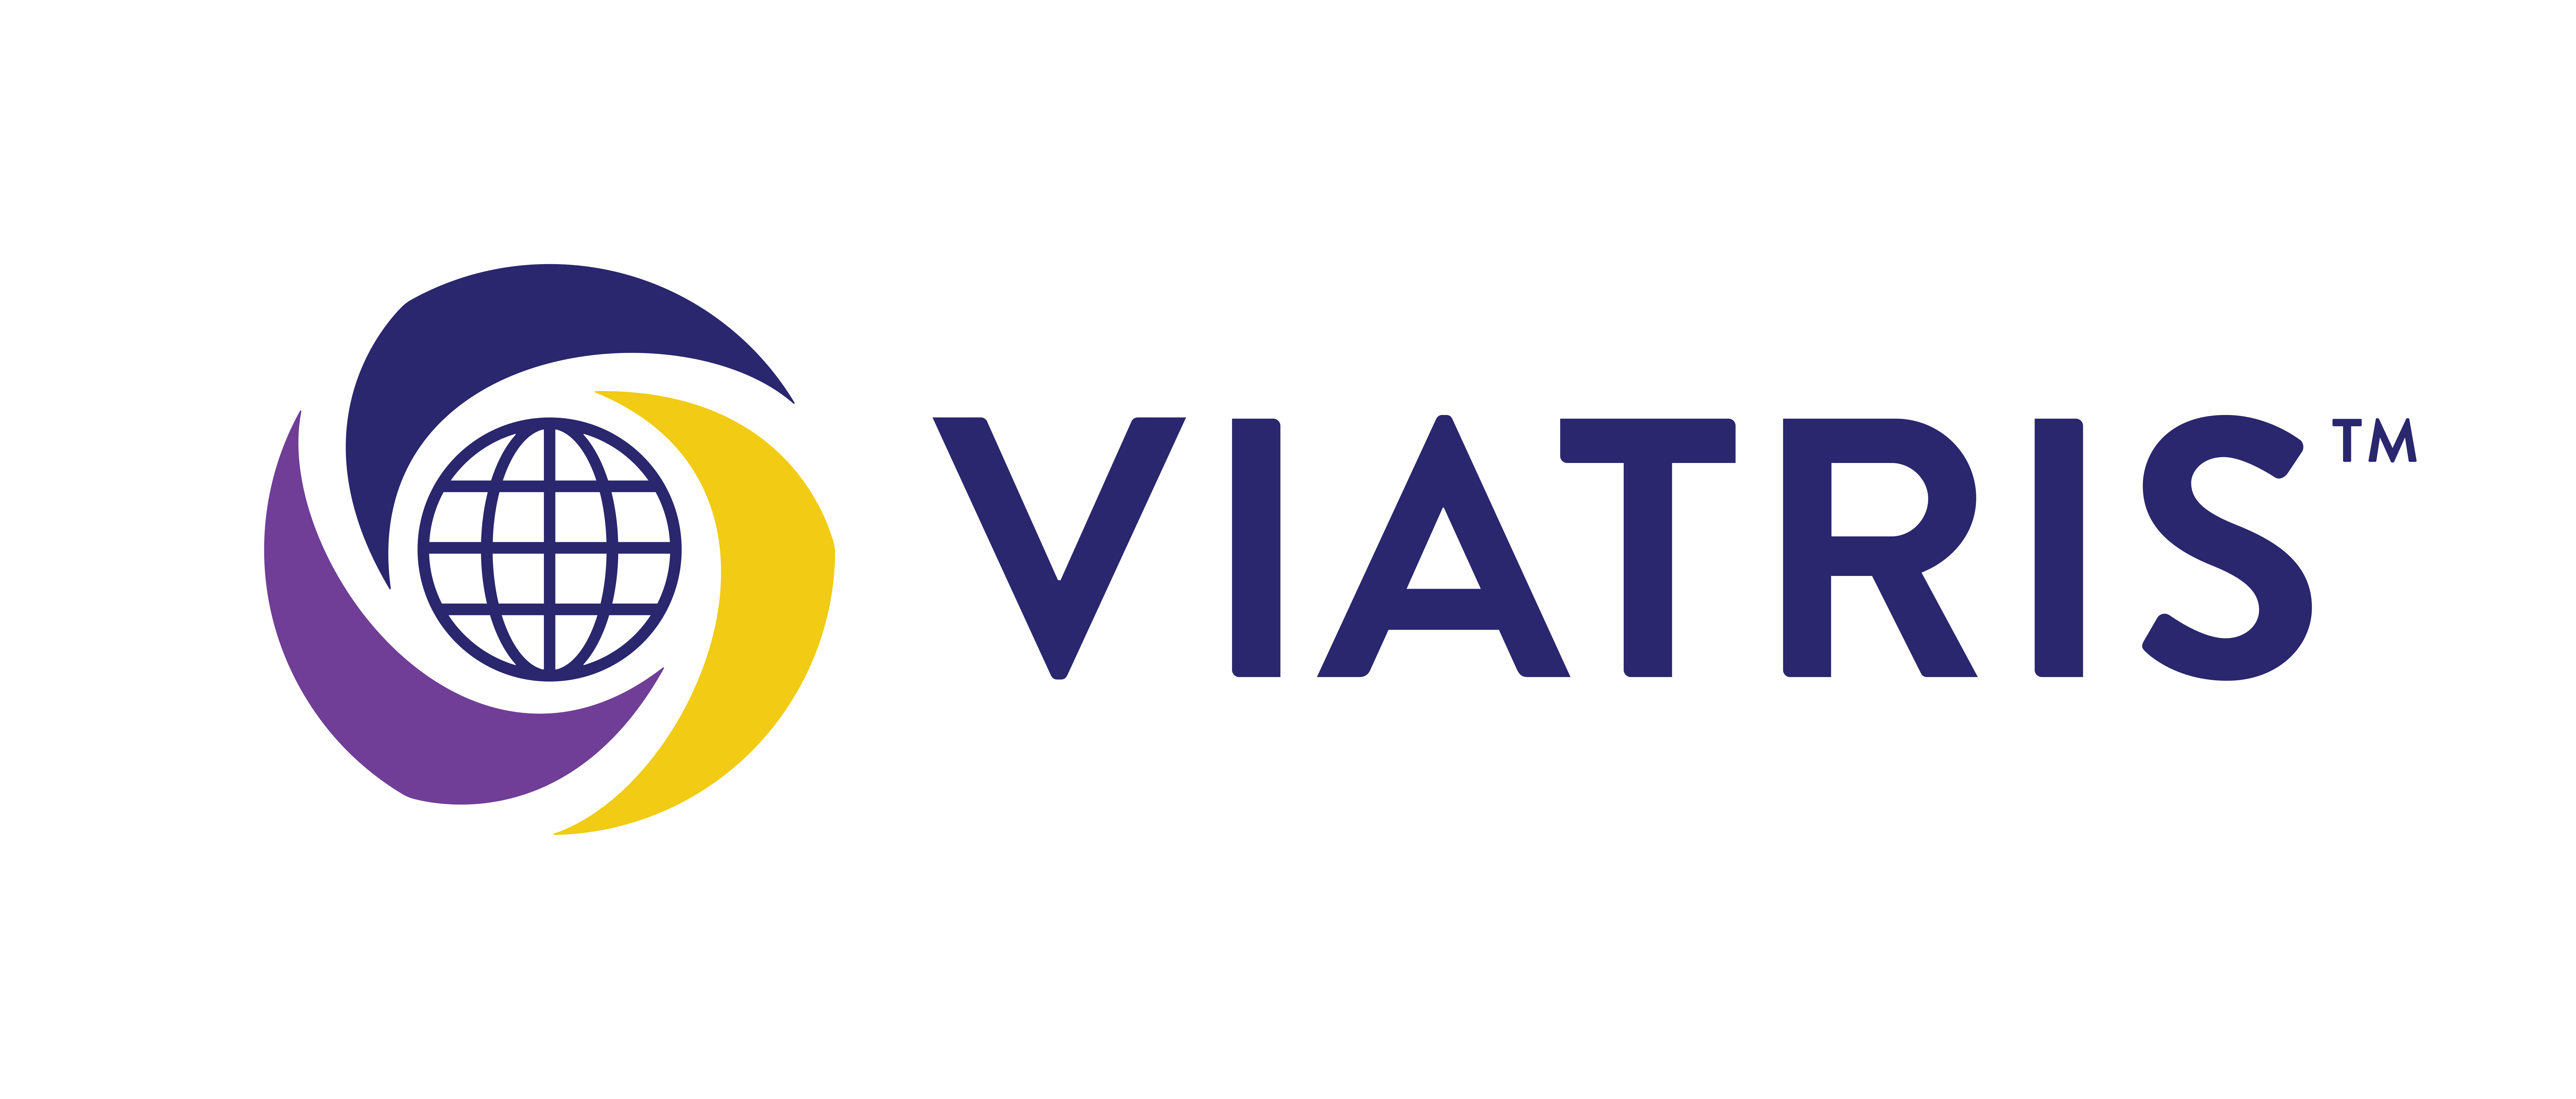 Logo Viatris violet et jaune.